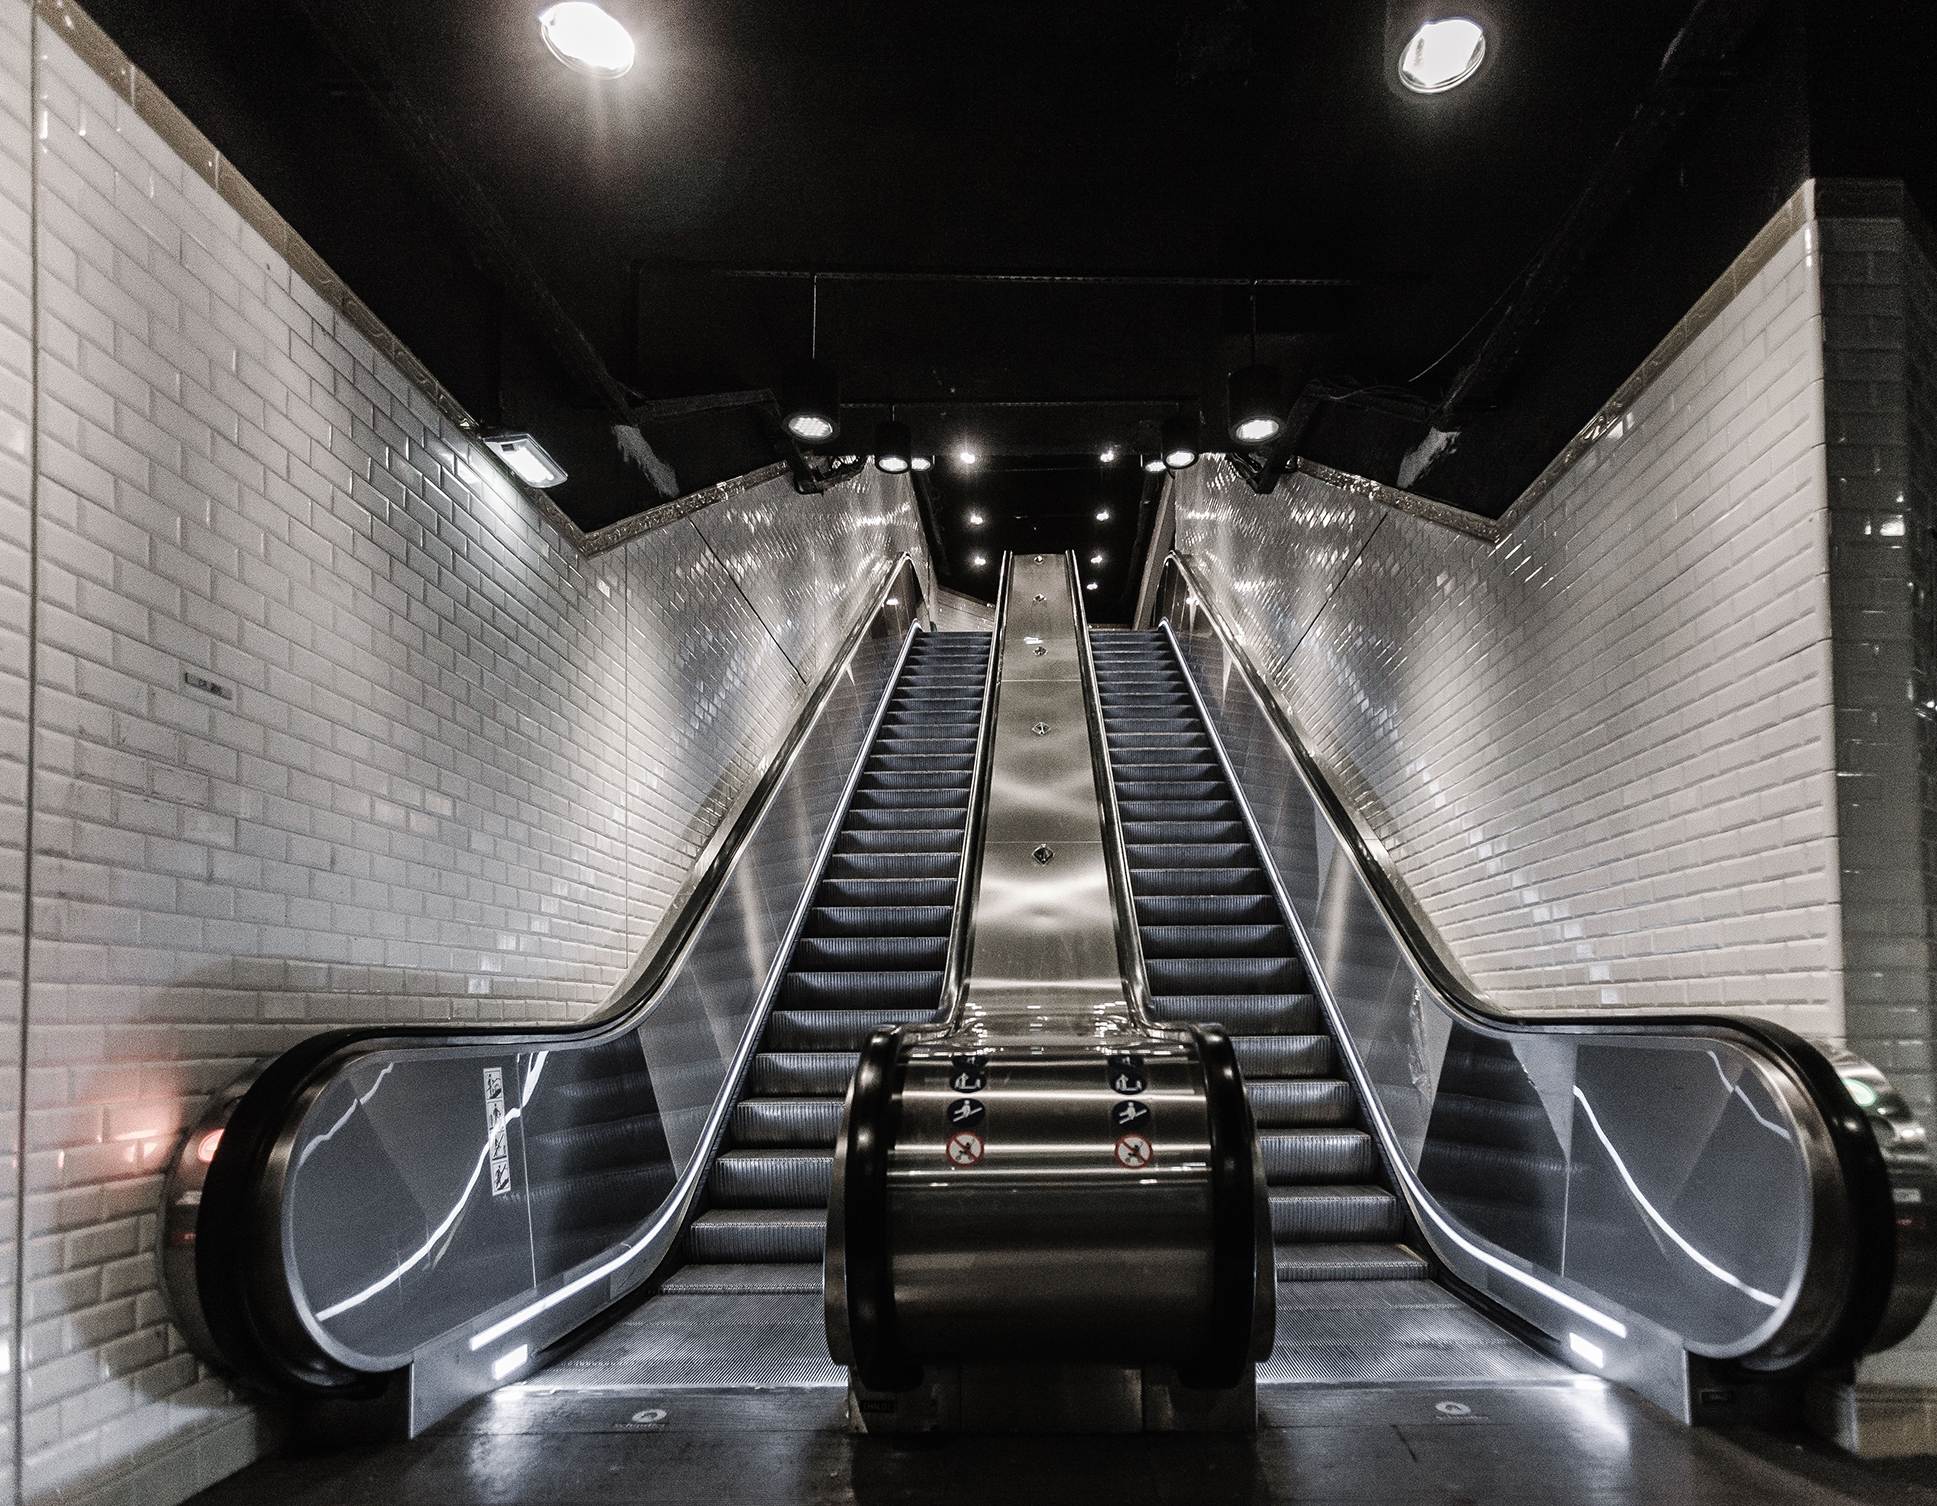 Public Transit Series Escalators →